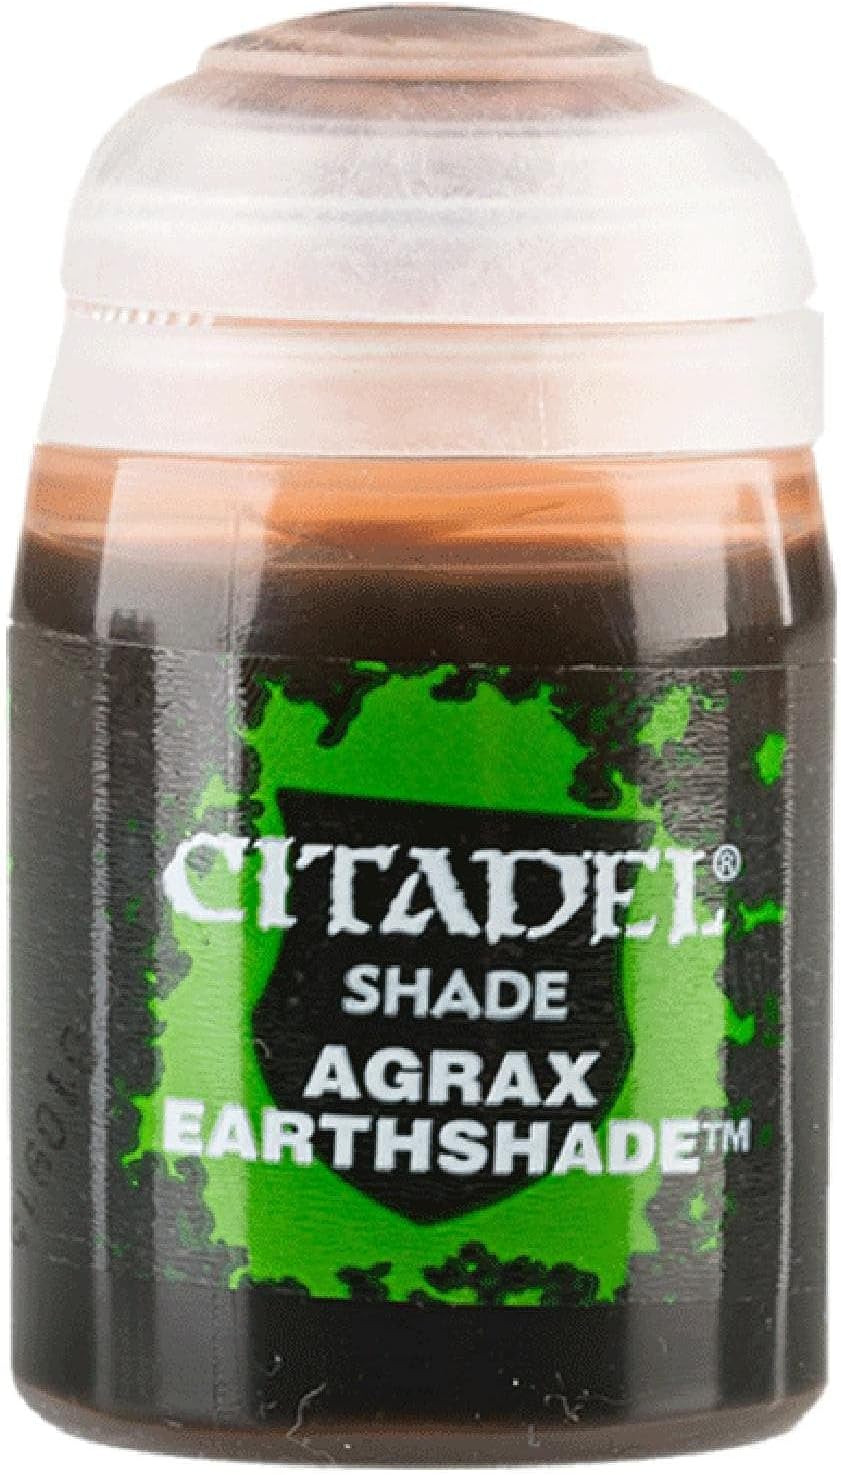 Citadel Paint, Shade: Agrax Earthshade